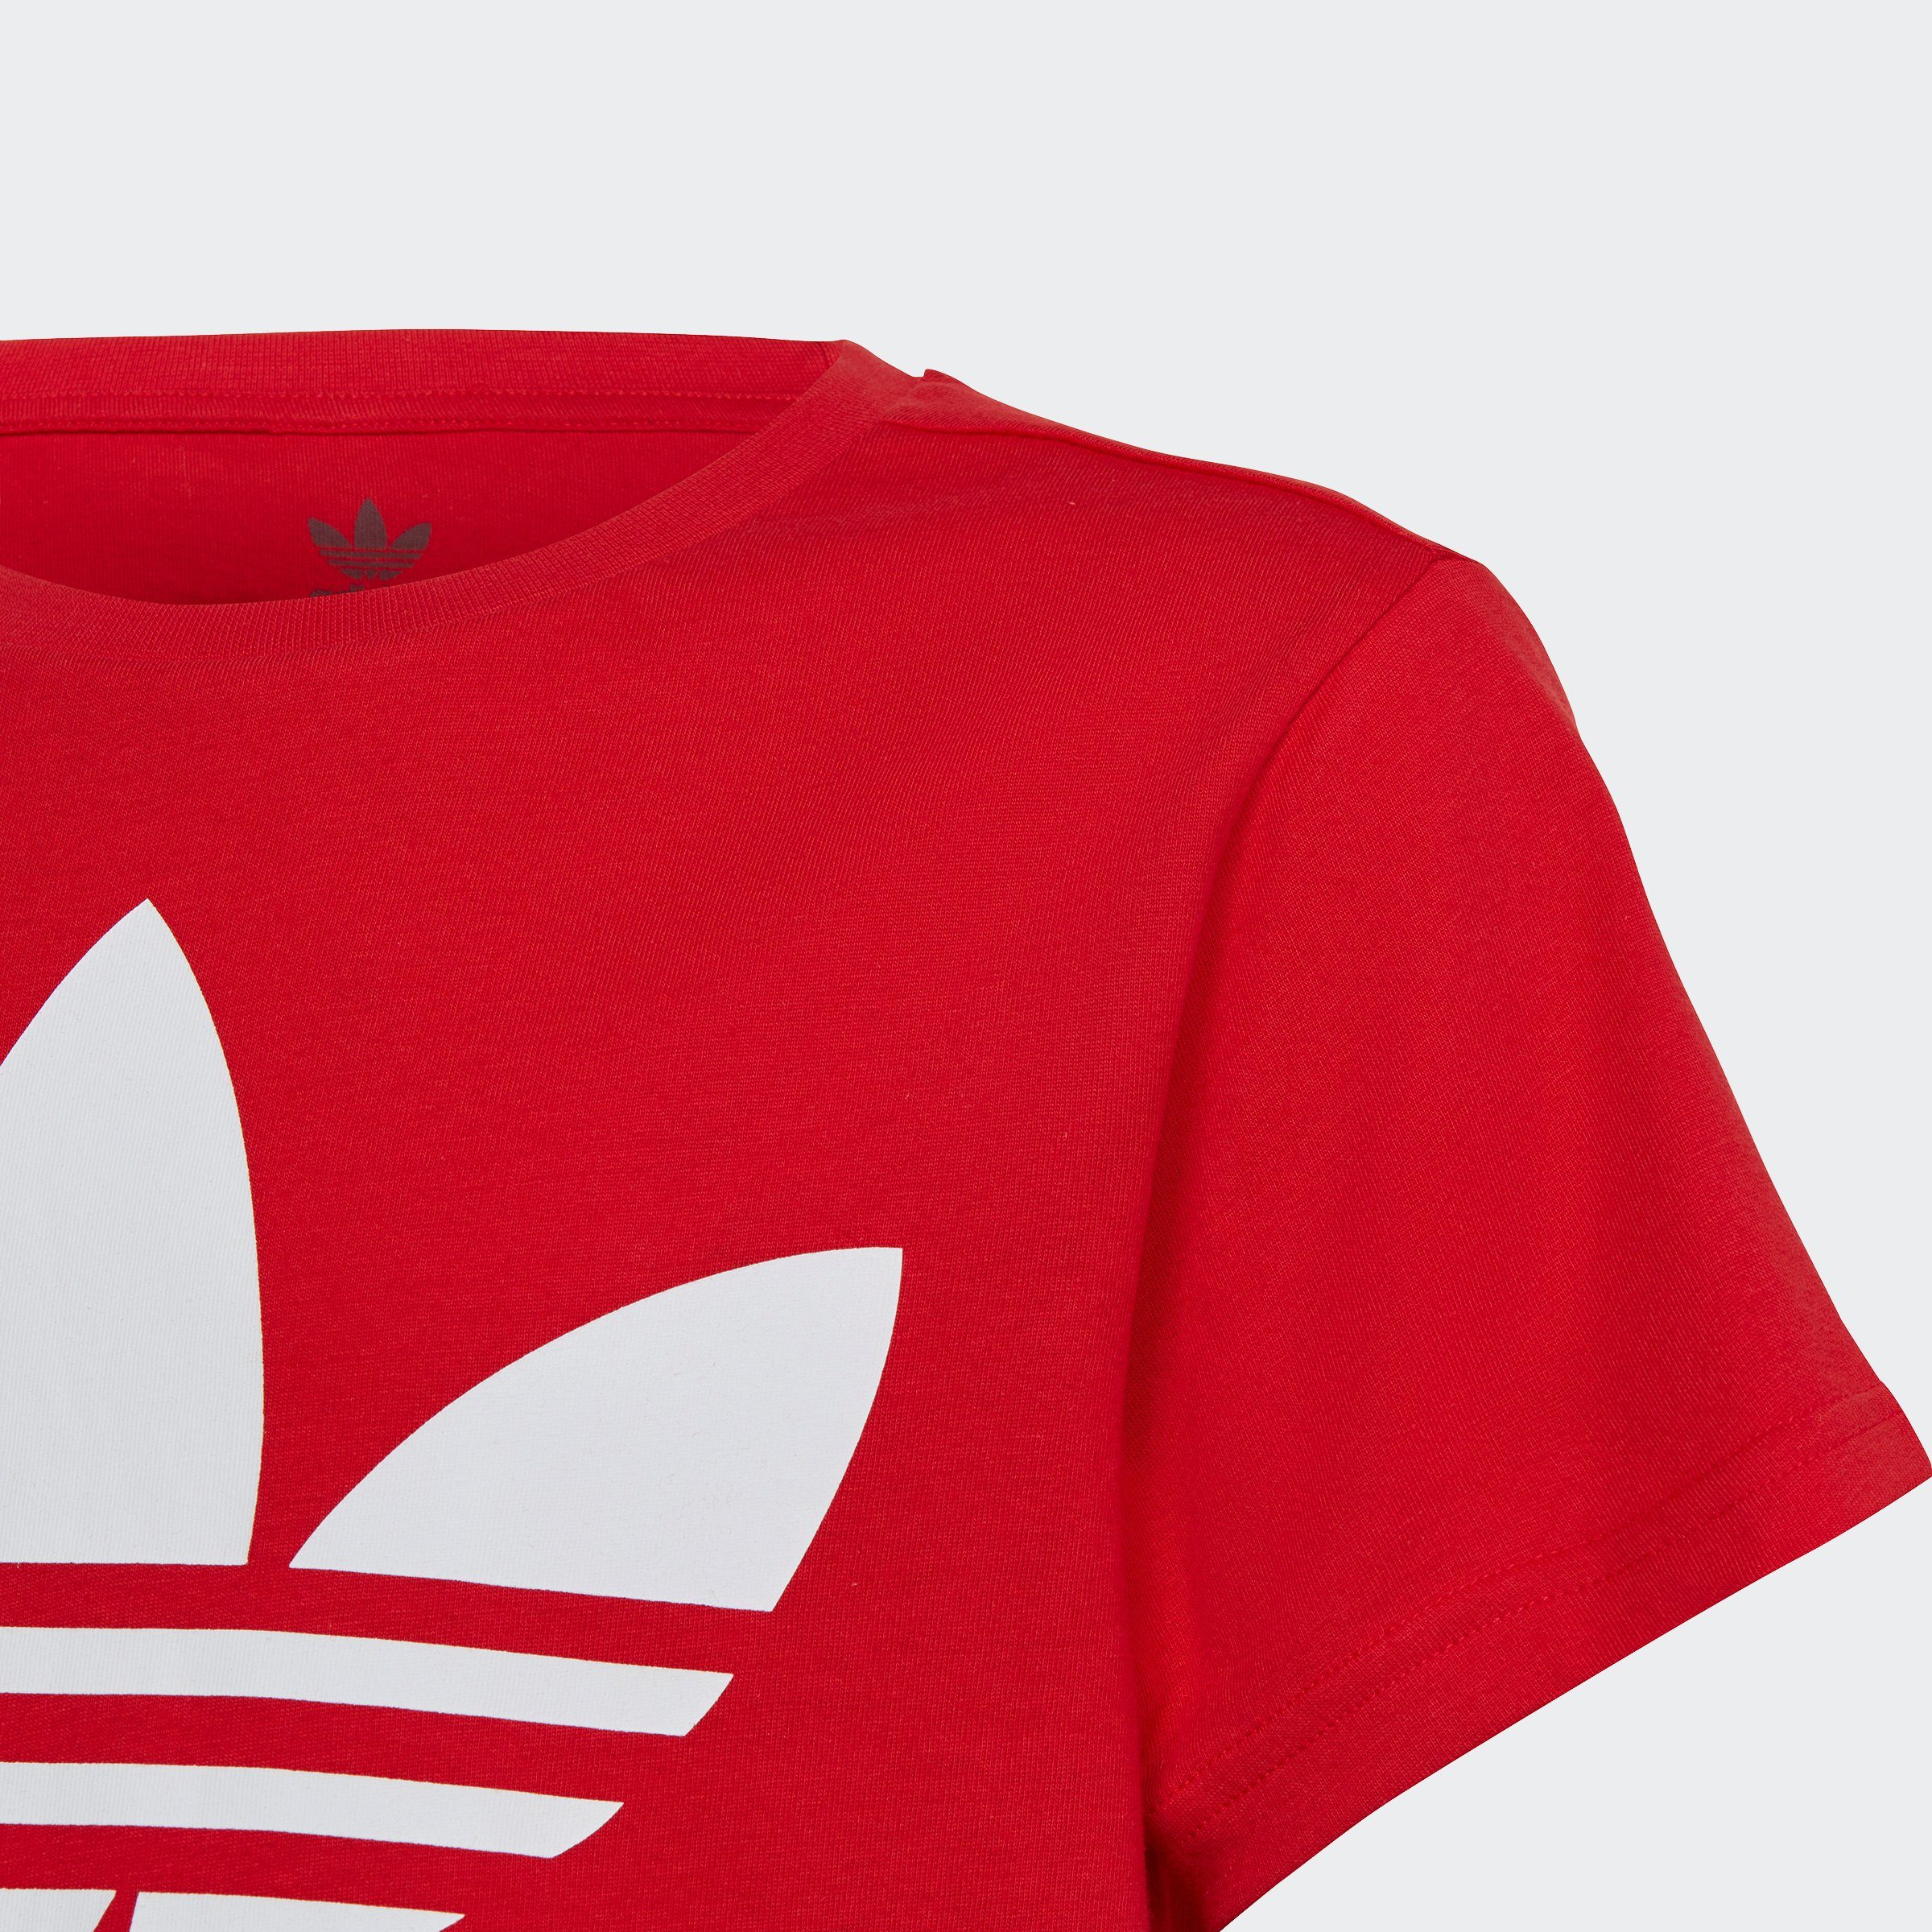 Better Originals Unisex TEE T-Shirt Scarlet TREFOIL adidas